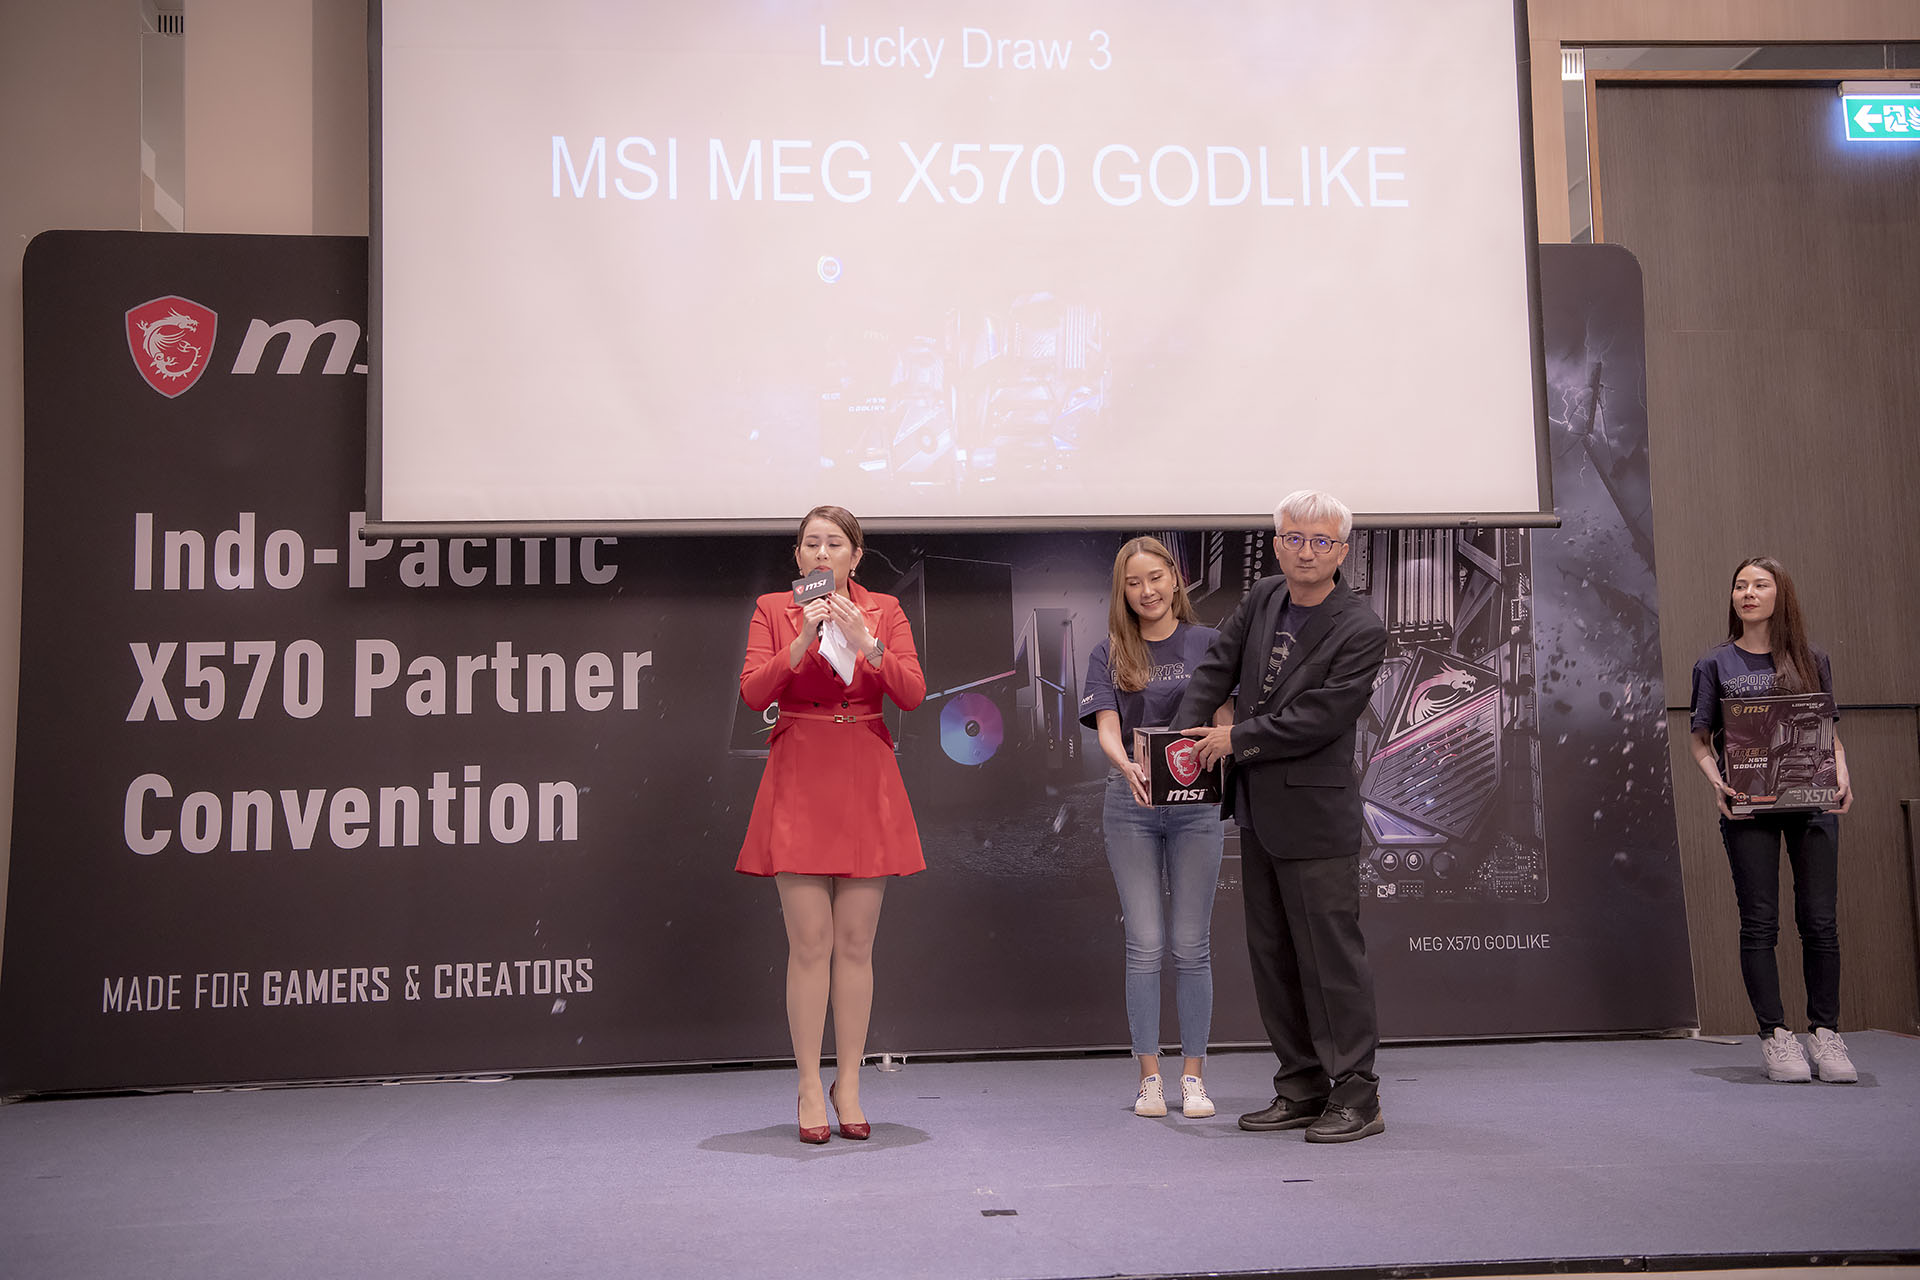 dsc 4968 บรรยากาศงาน MSI Indo Pacific X570 Partner Convention พบการเปิดตัวเมนบอร์ด X570 รุ่นใหม่ล่าสุดจากทาง MSI ต้อนรับการมาของซีพียู AMD RYZEN 3000ซีรี่ย์ 